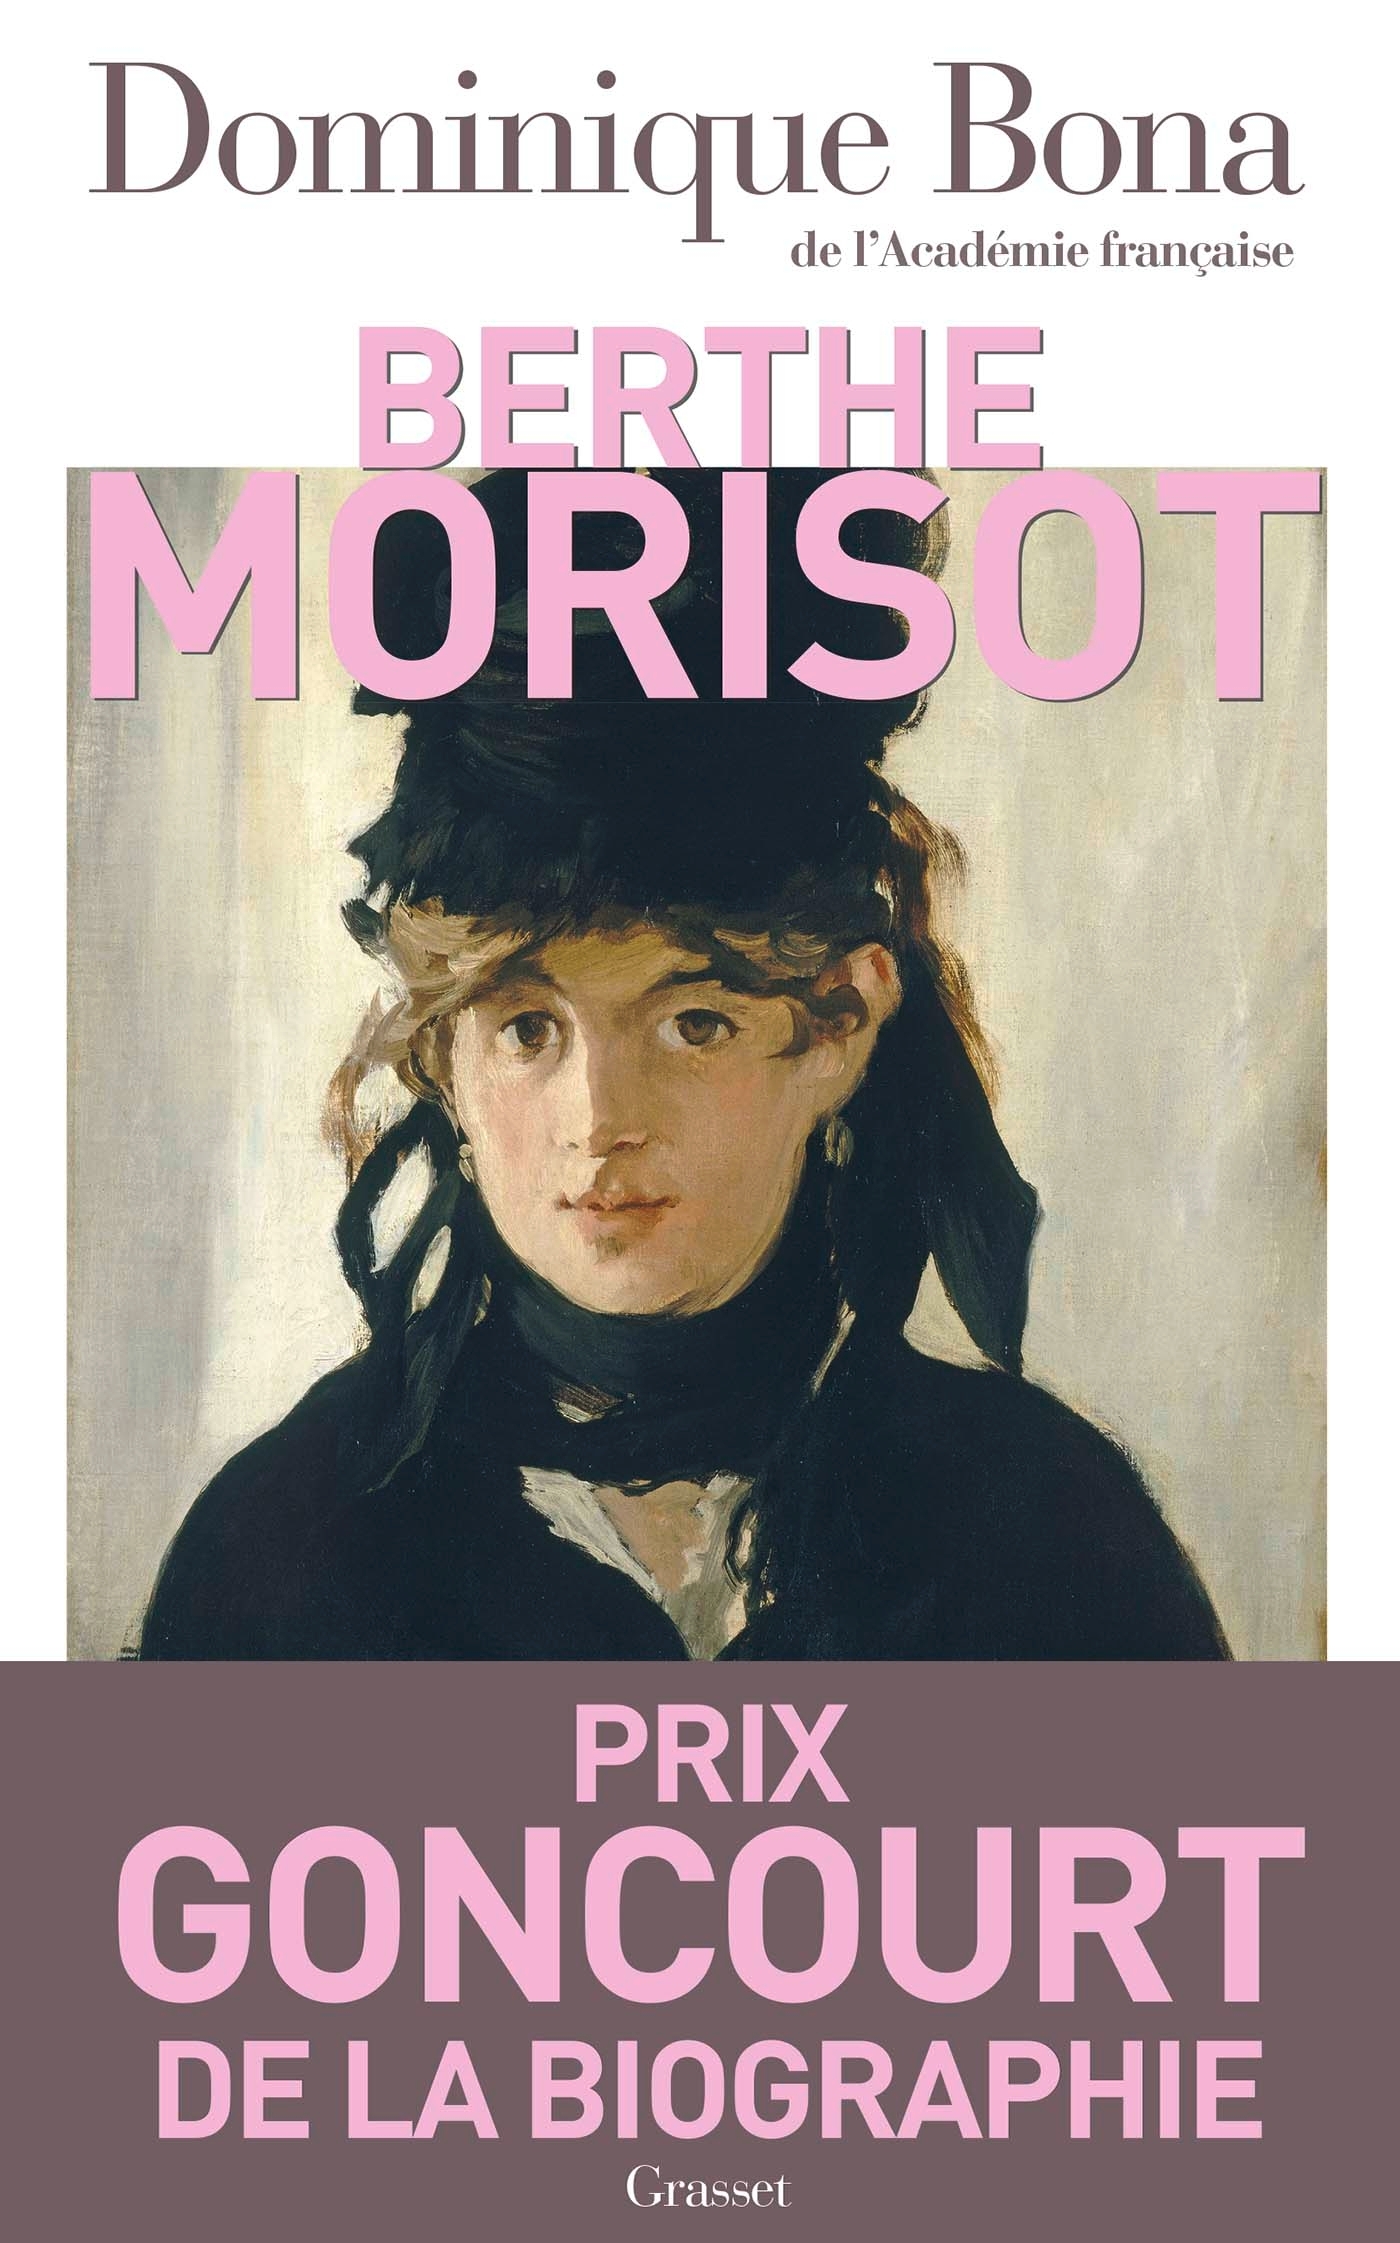 Berthe Morisot - Ned, biographie, nouvelle édition (9782246821960-front-cover)